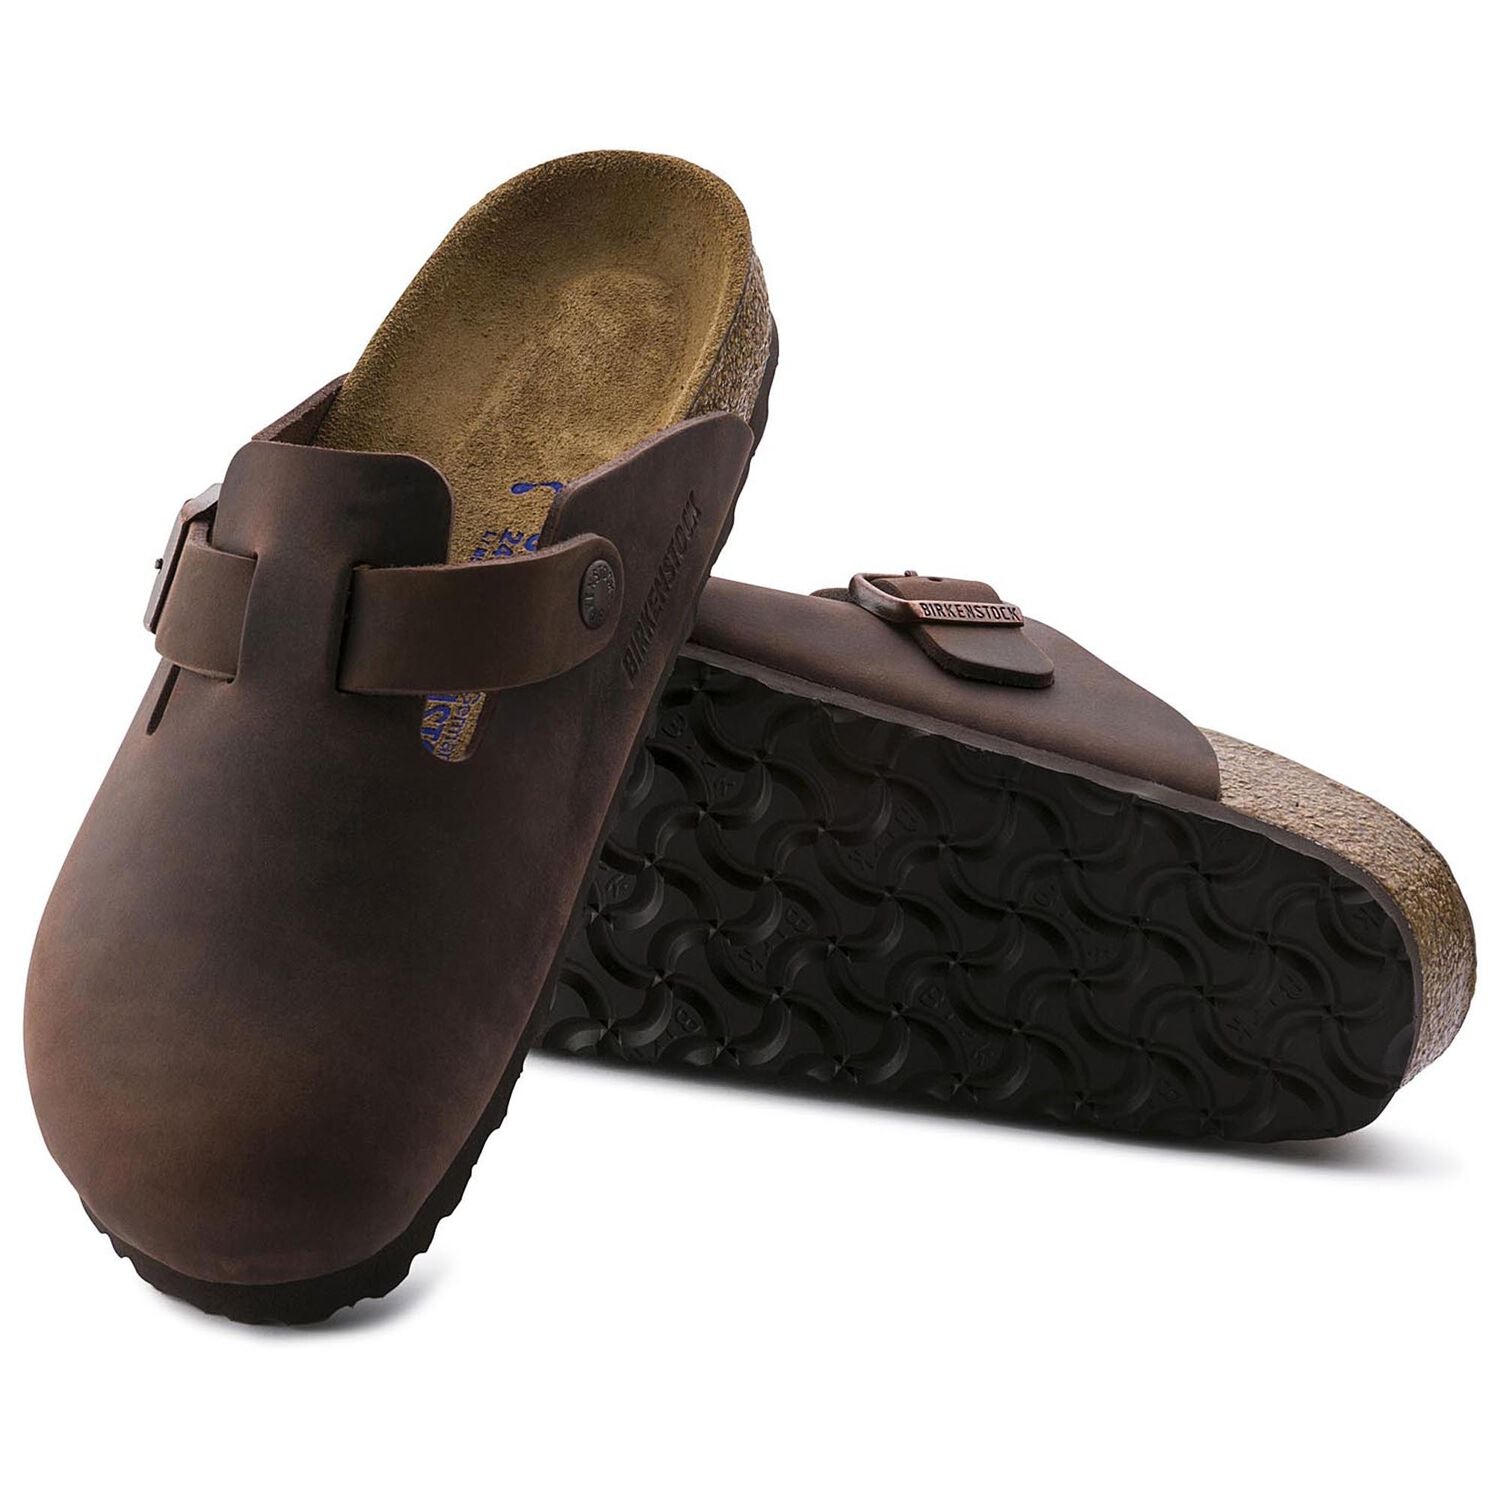 Birkenstock Boston Soft Footbed habana oiled leather